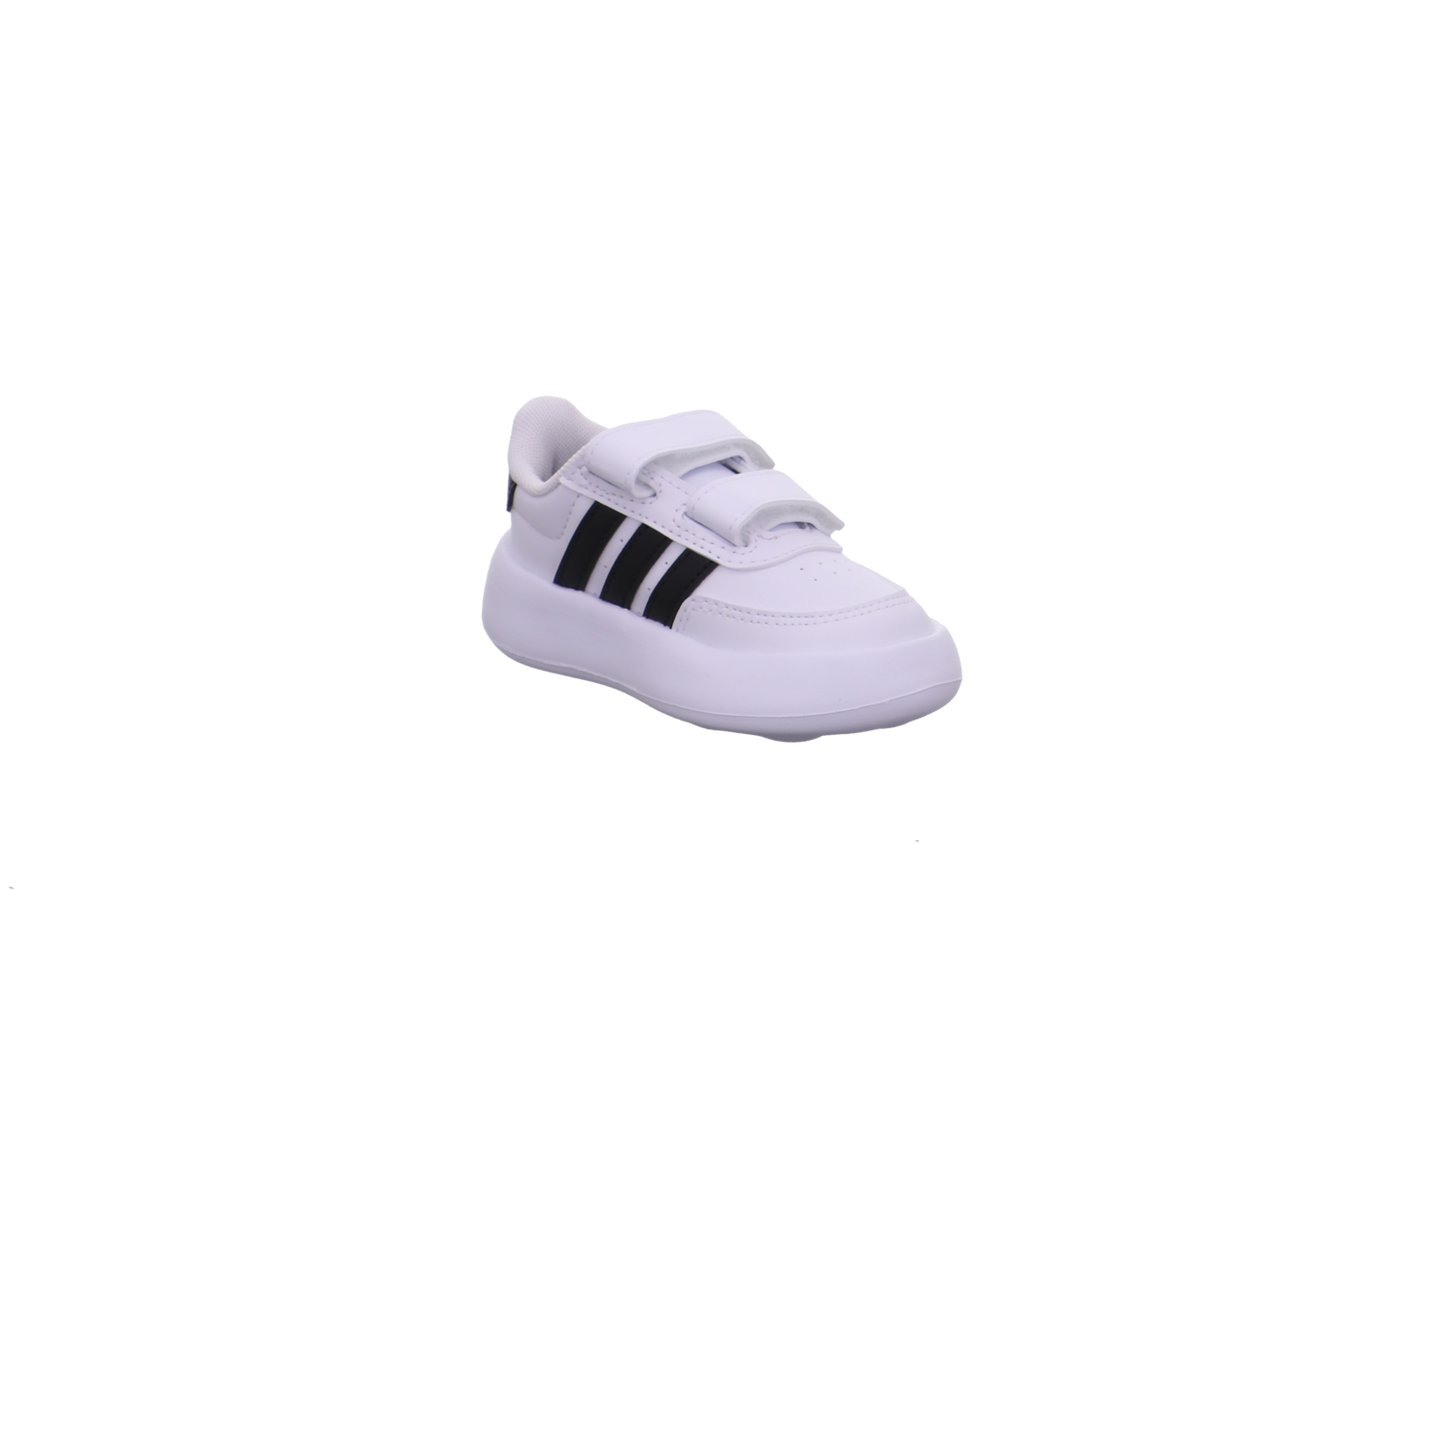 Adidas BREAKNET 2.0 CF I weiß-schwarz Bild7